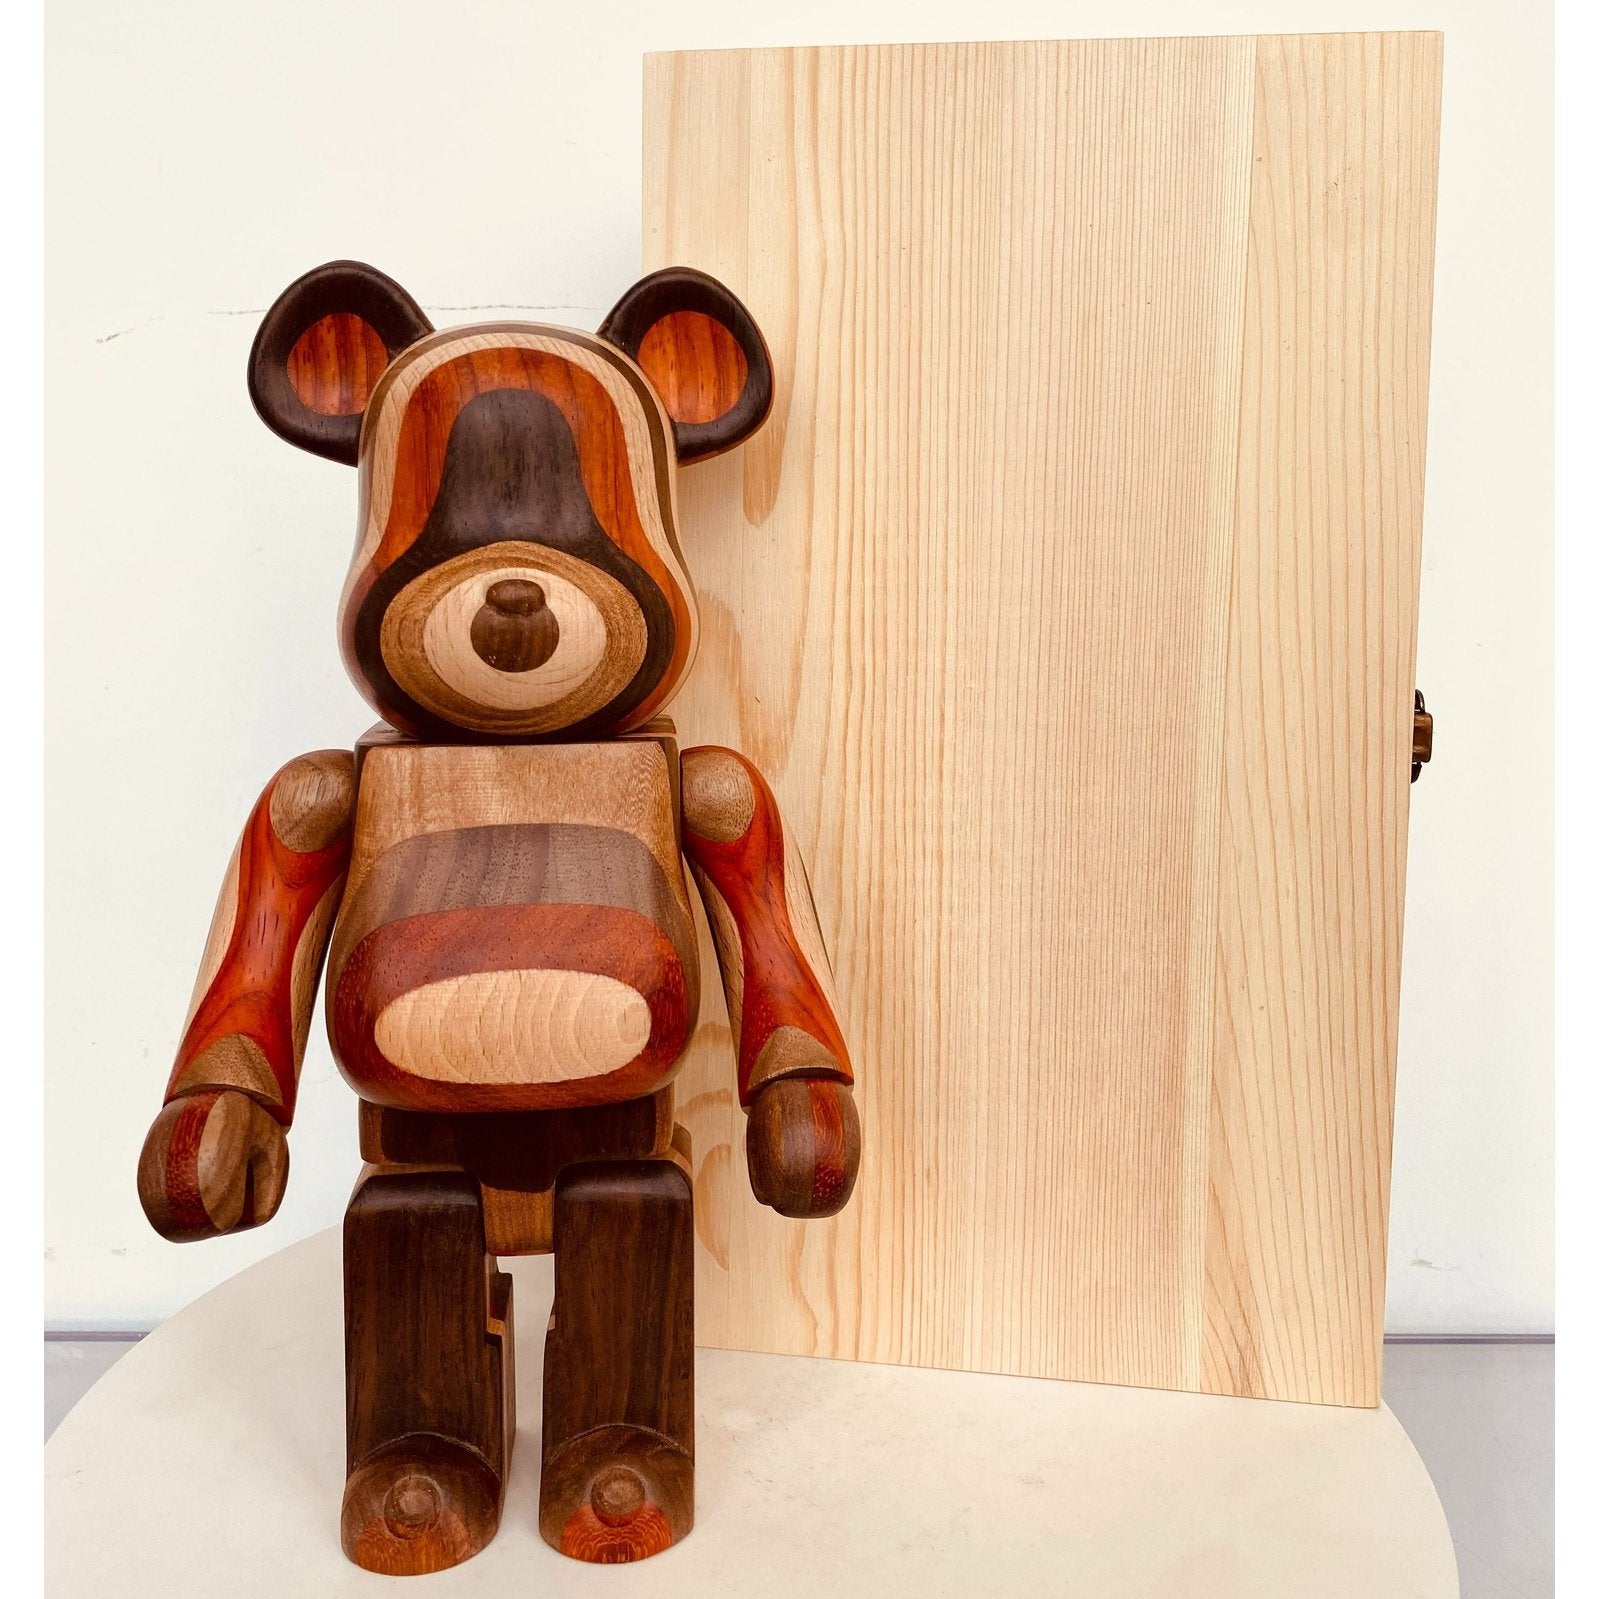 Wooden Charm with KarimokuCraved Violence Bear - Unique & Stylish 28cm Bearbrick Figure